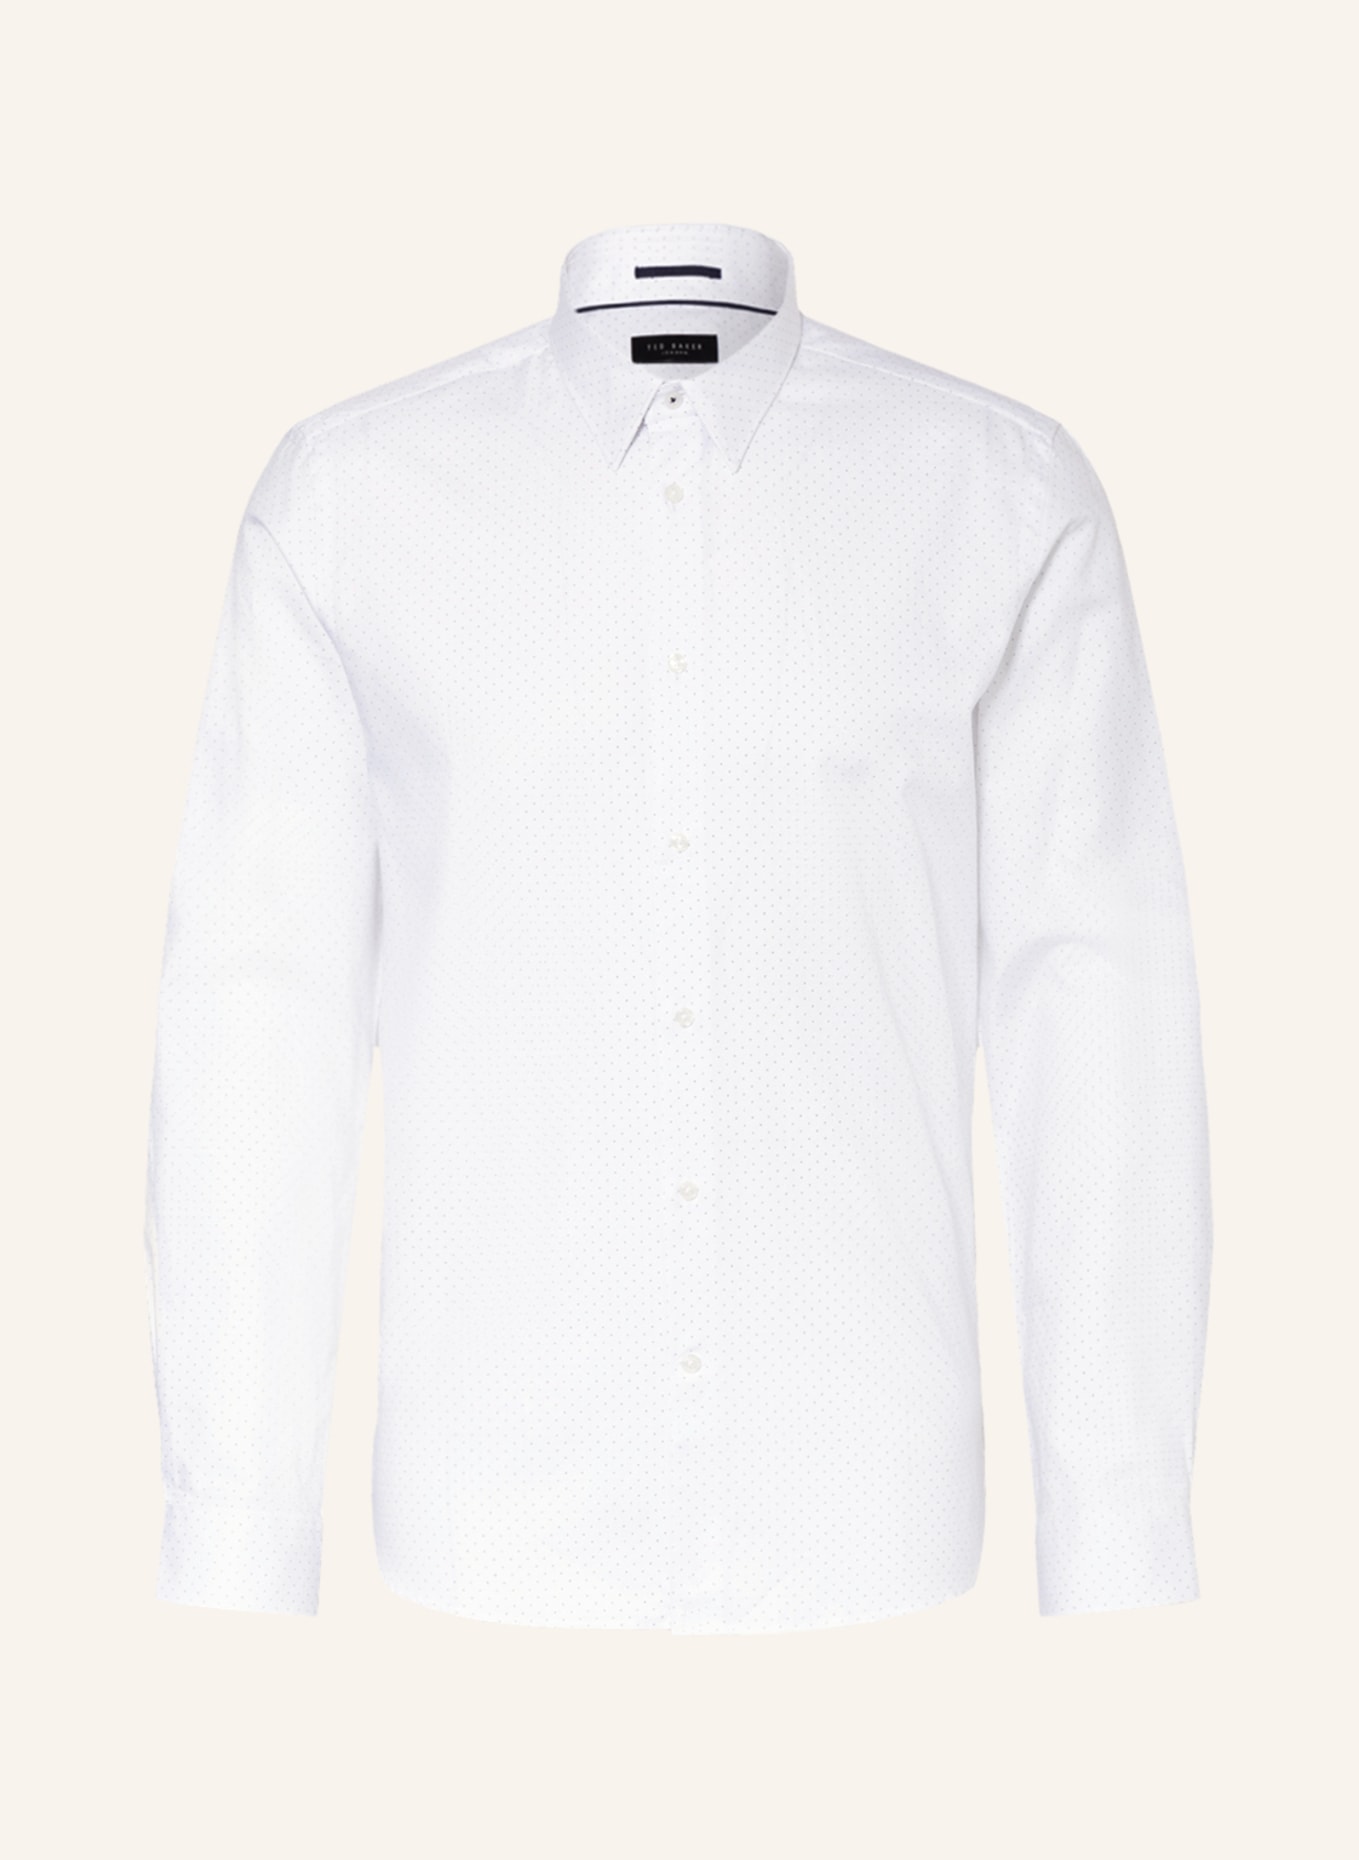 TED BAKER Hemd HYSOPSS Slim Fit, Farbe: WEISS (Bild 1)